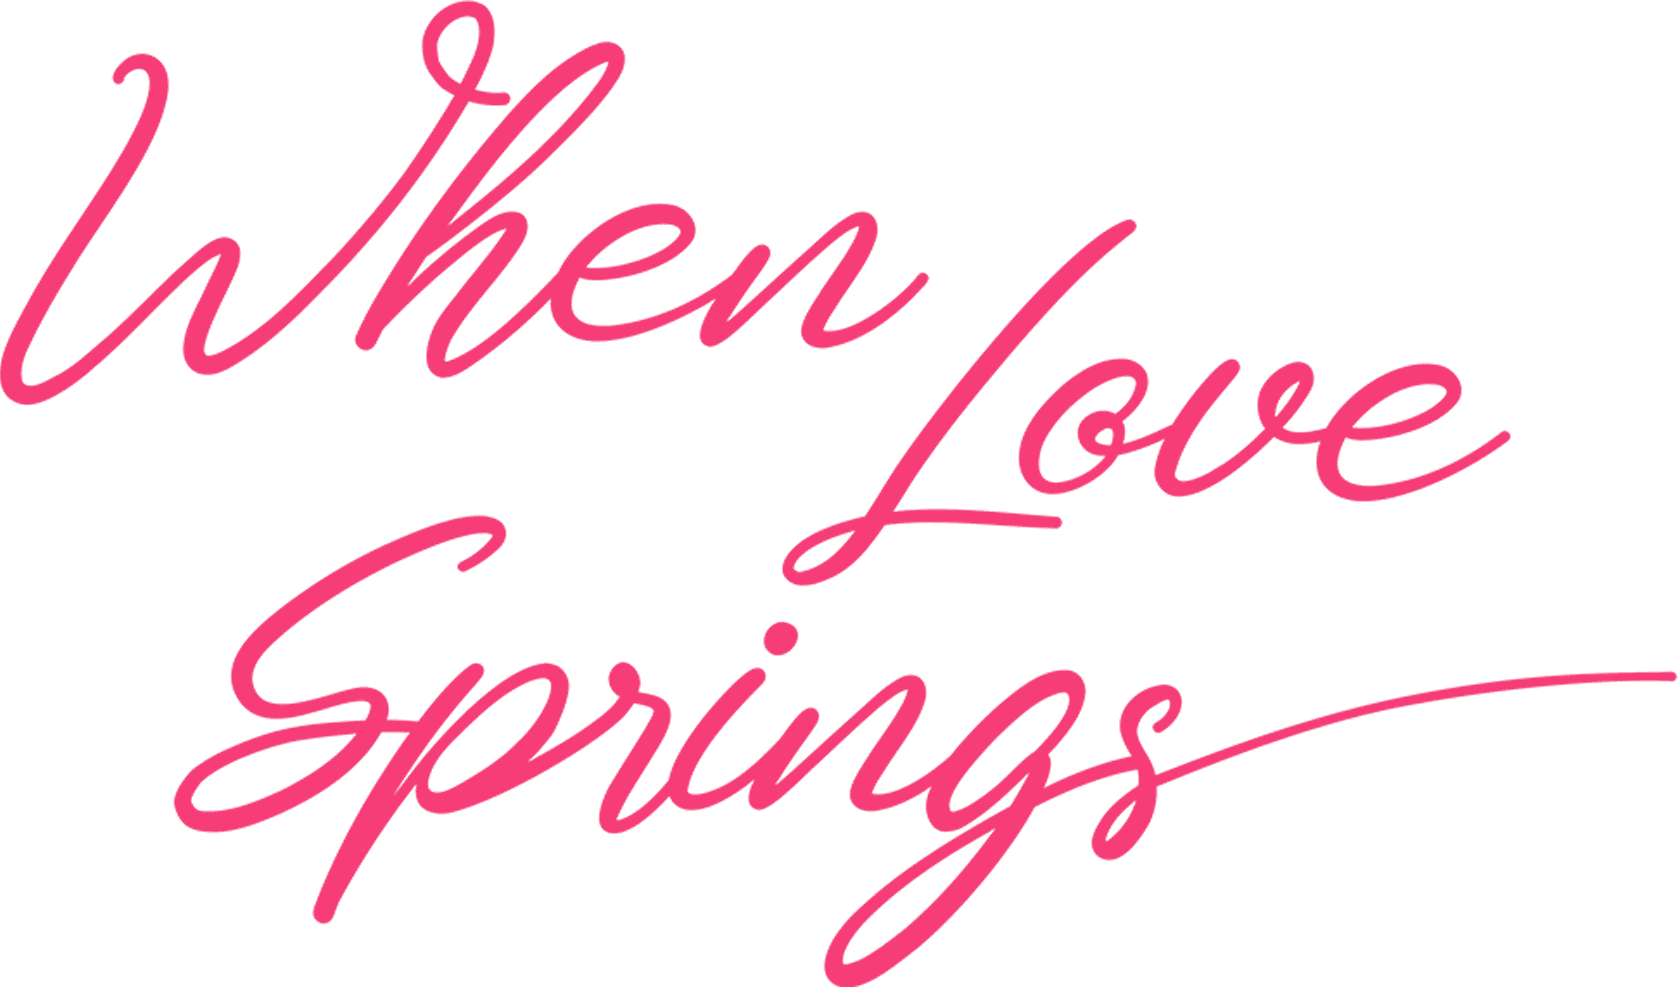 When Love Springs logo